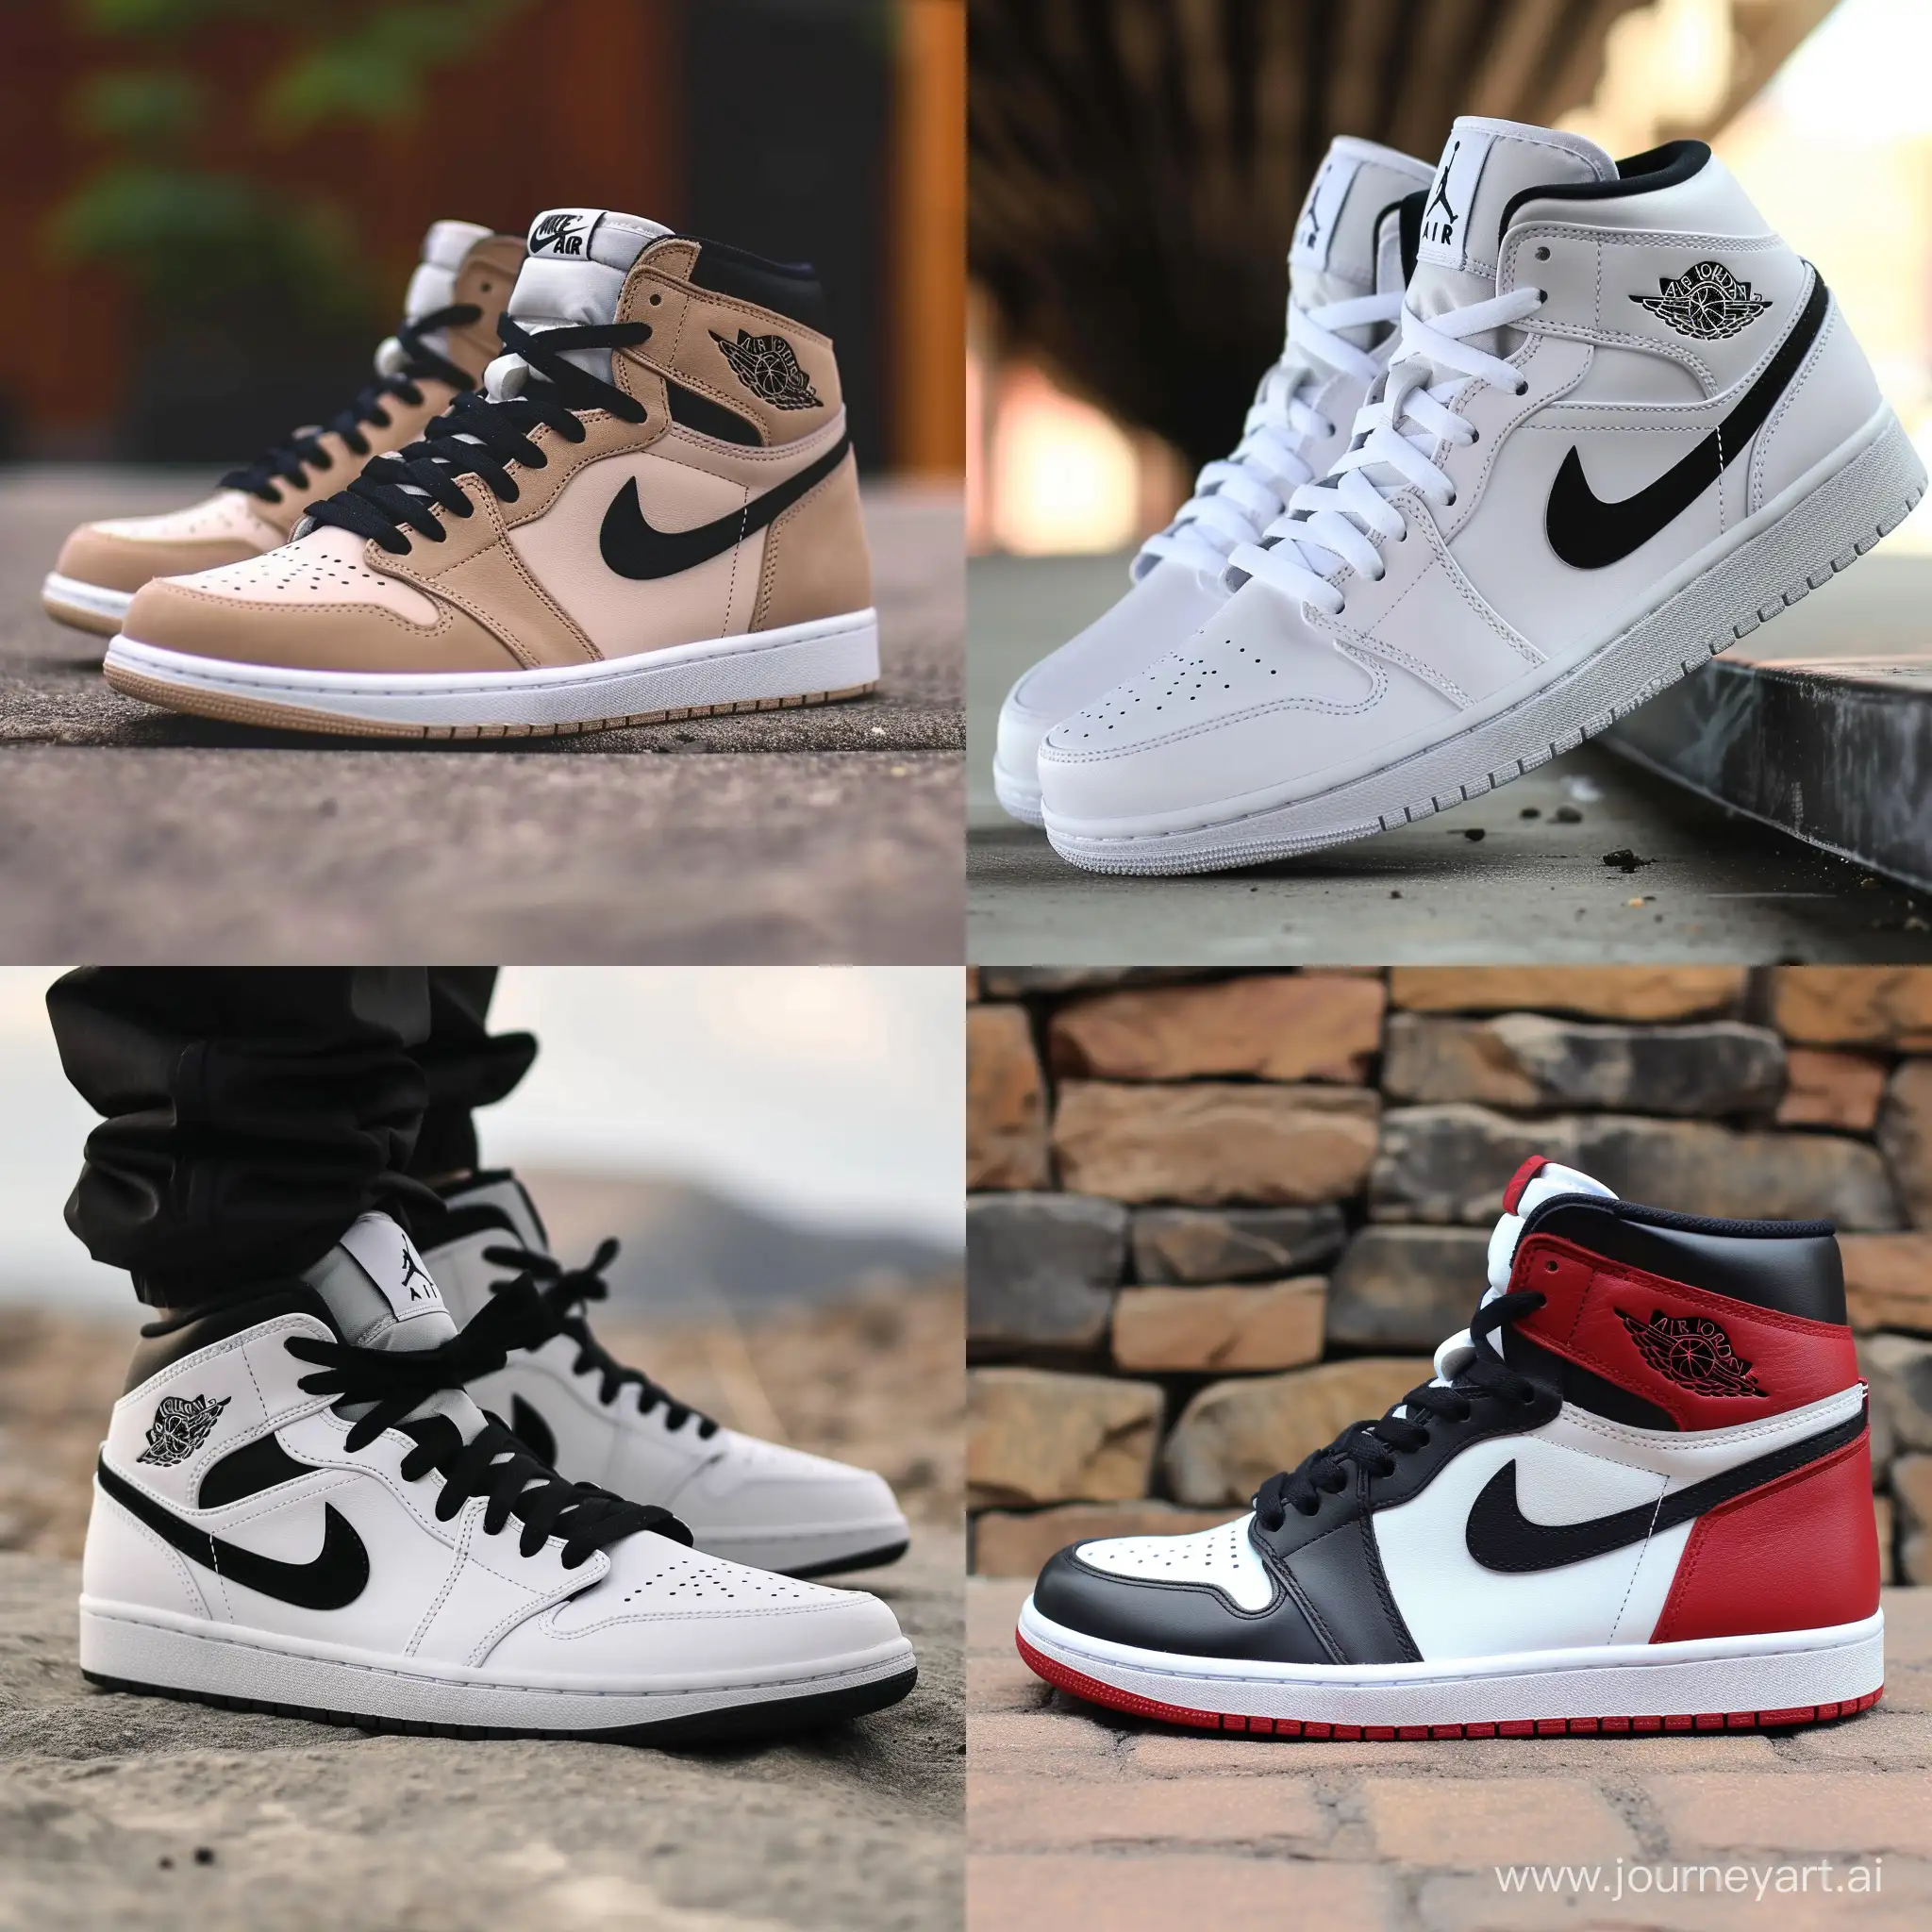 Stylish-Nike-Jordan-1-Version-6-with-Authentic-11-Ratio-24394